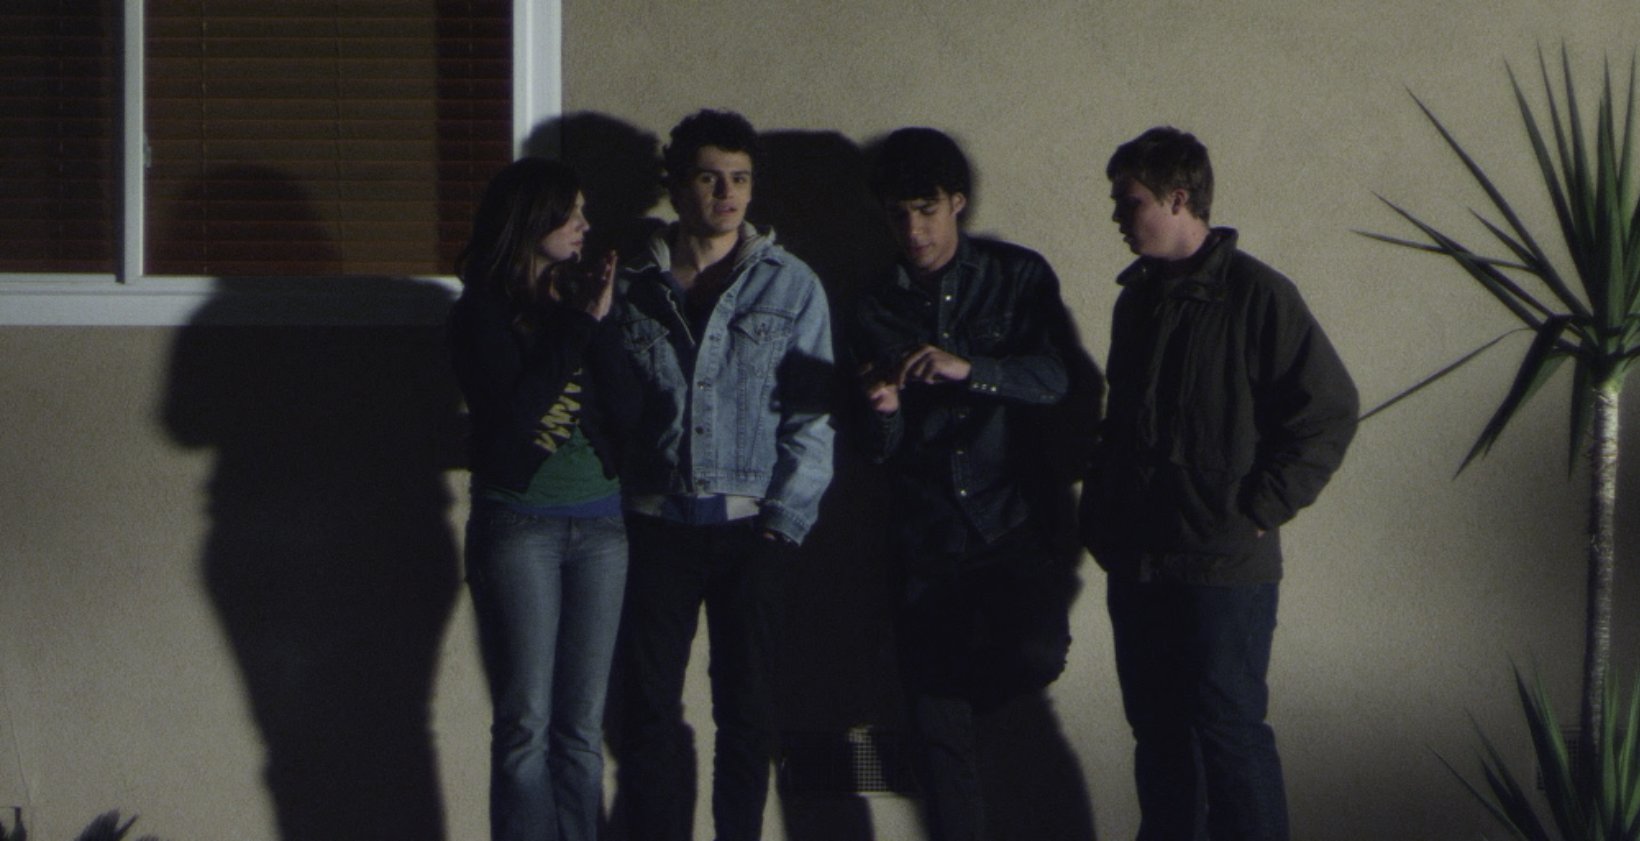 Still of Sarah E. Johnston (Jennifer), Brett Del Buono (Tommy Lemont), Gabriel Benitez (Jack) and Jack Szarabajka (Gabriel) in The Insomniac, 2013.